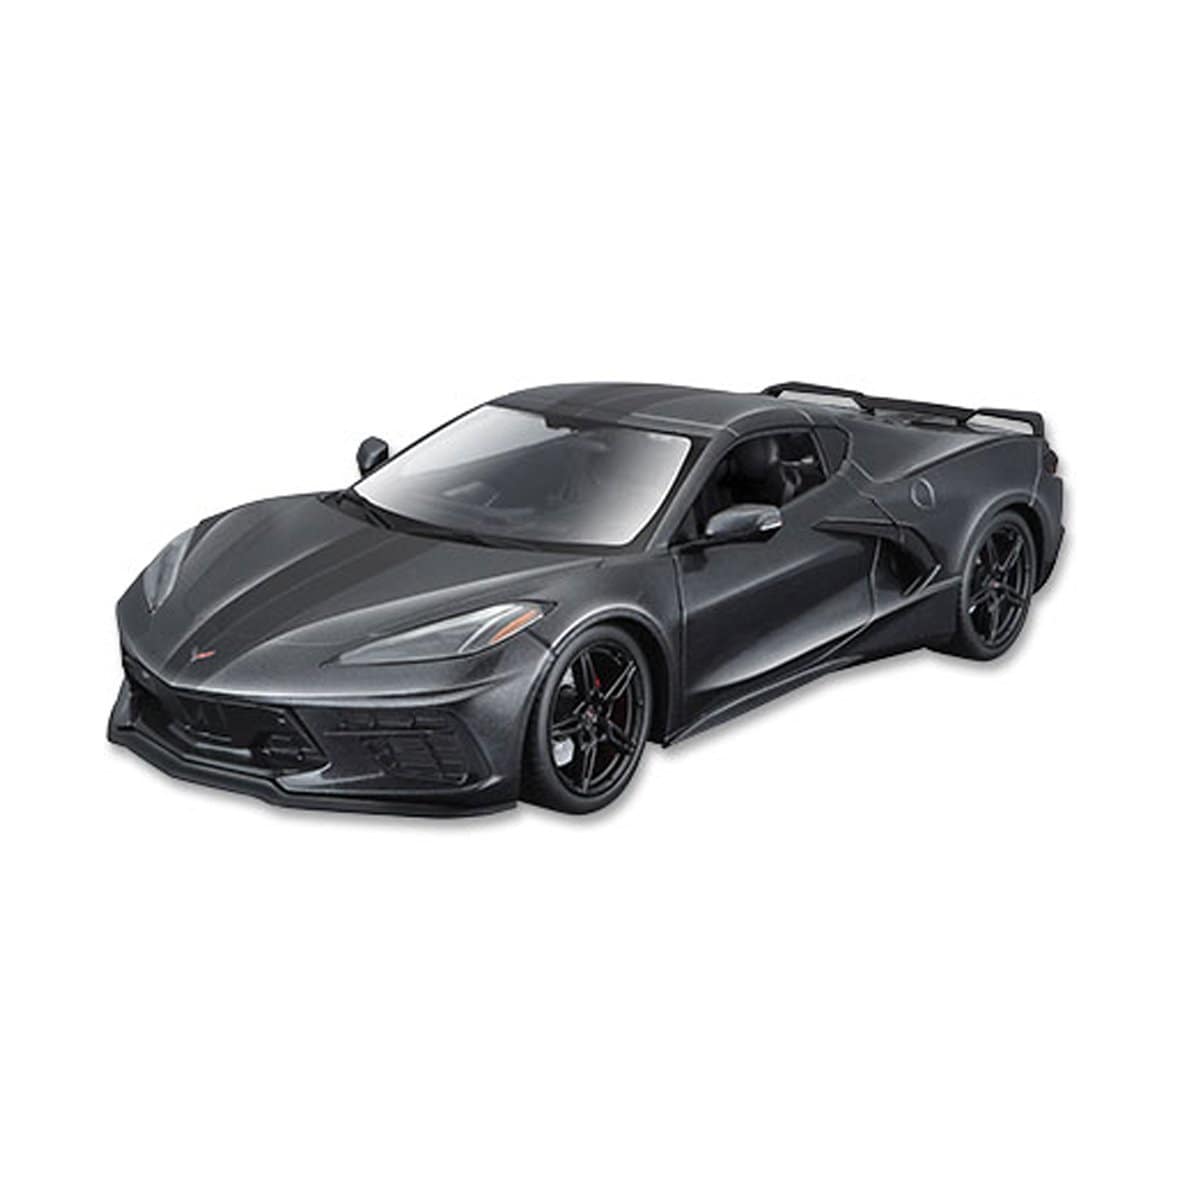 Black 2020 C8 Corvette Stingray Die Cast Model Car with Z51 Package and CFZ Spoiler | ACS Composite | SKU 50-4-073